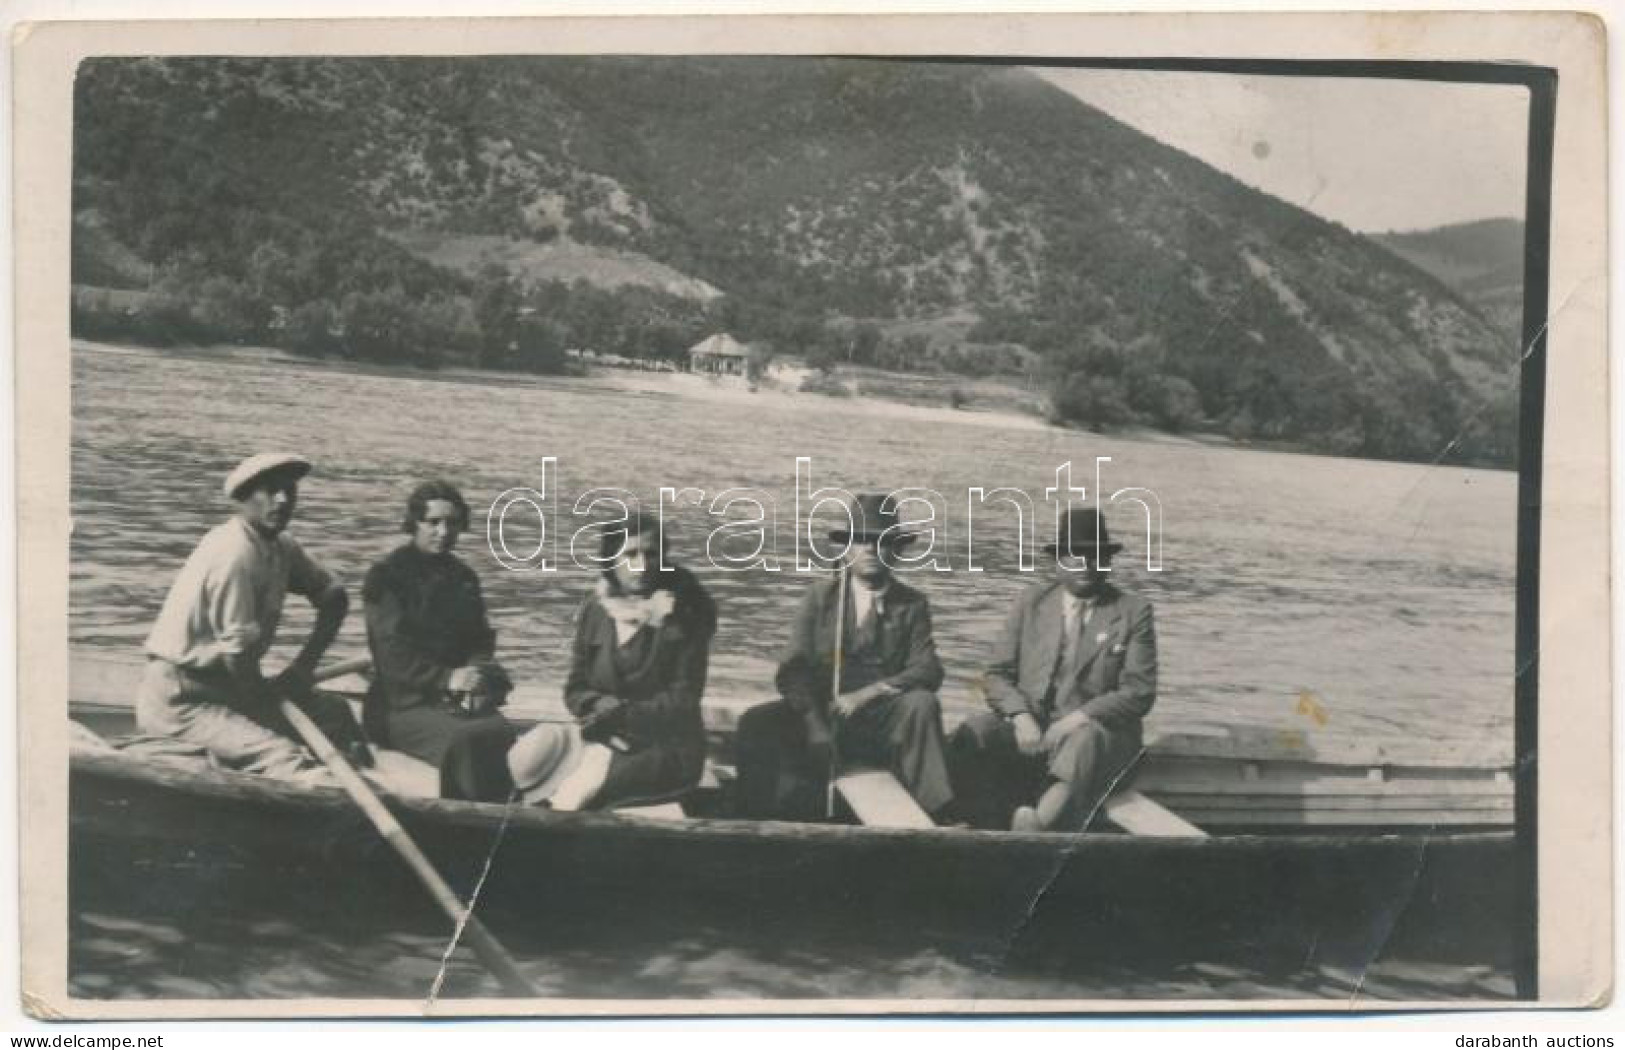 * T4 1935 Ada Kaleh, Utasok Csónakban / Passengers In A Boat. Photo (b) - Unclassified